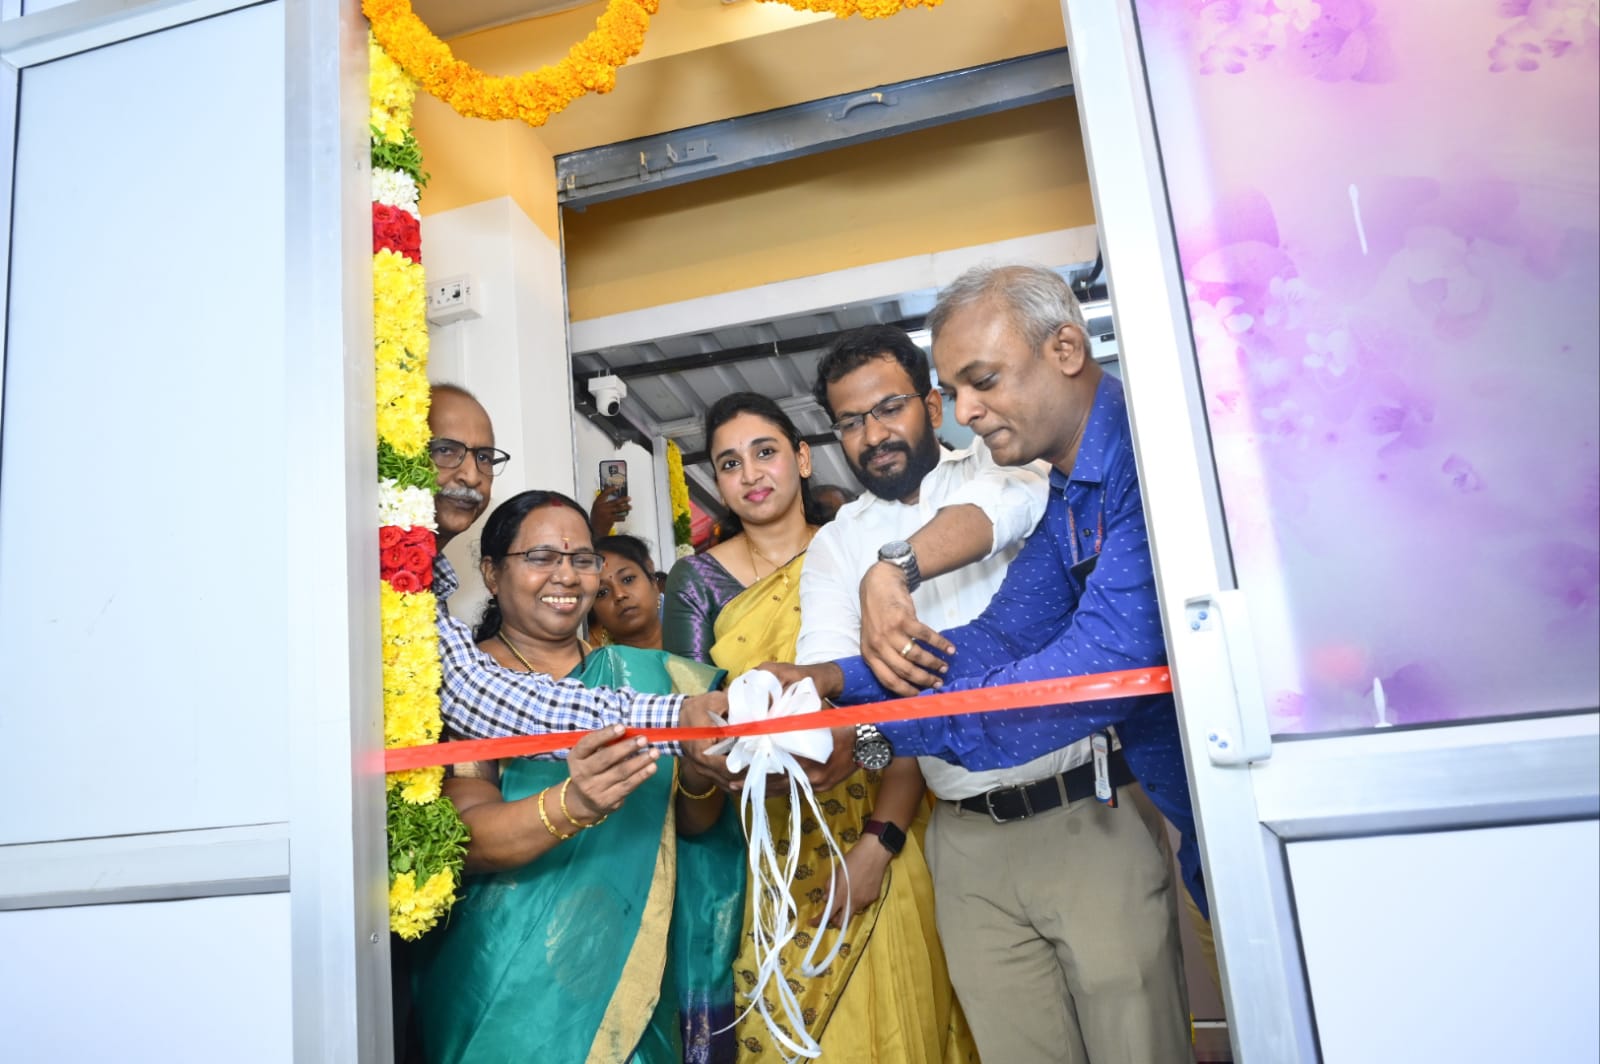 The ribbon cutting at the opening of the new Anderson Diagnostic Center at Periyar Nagar.